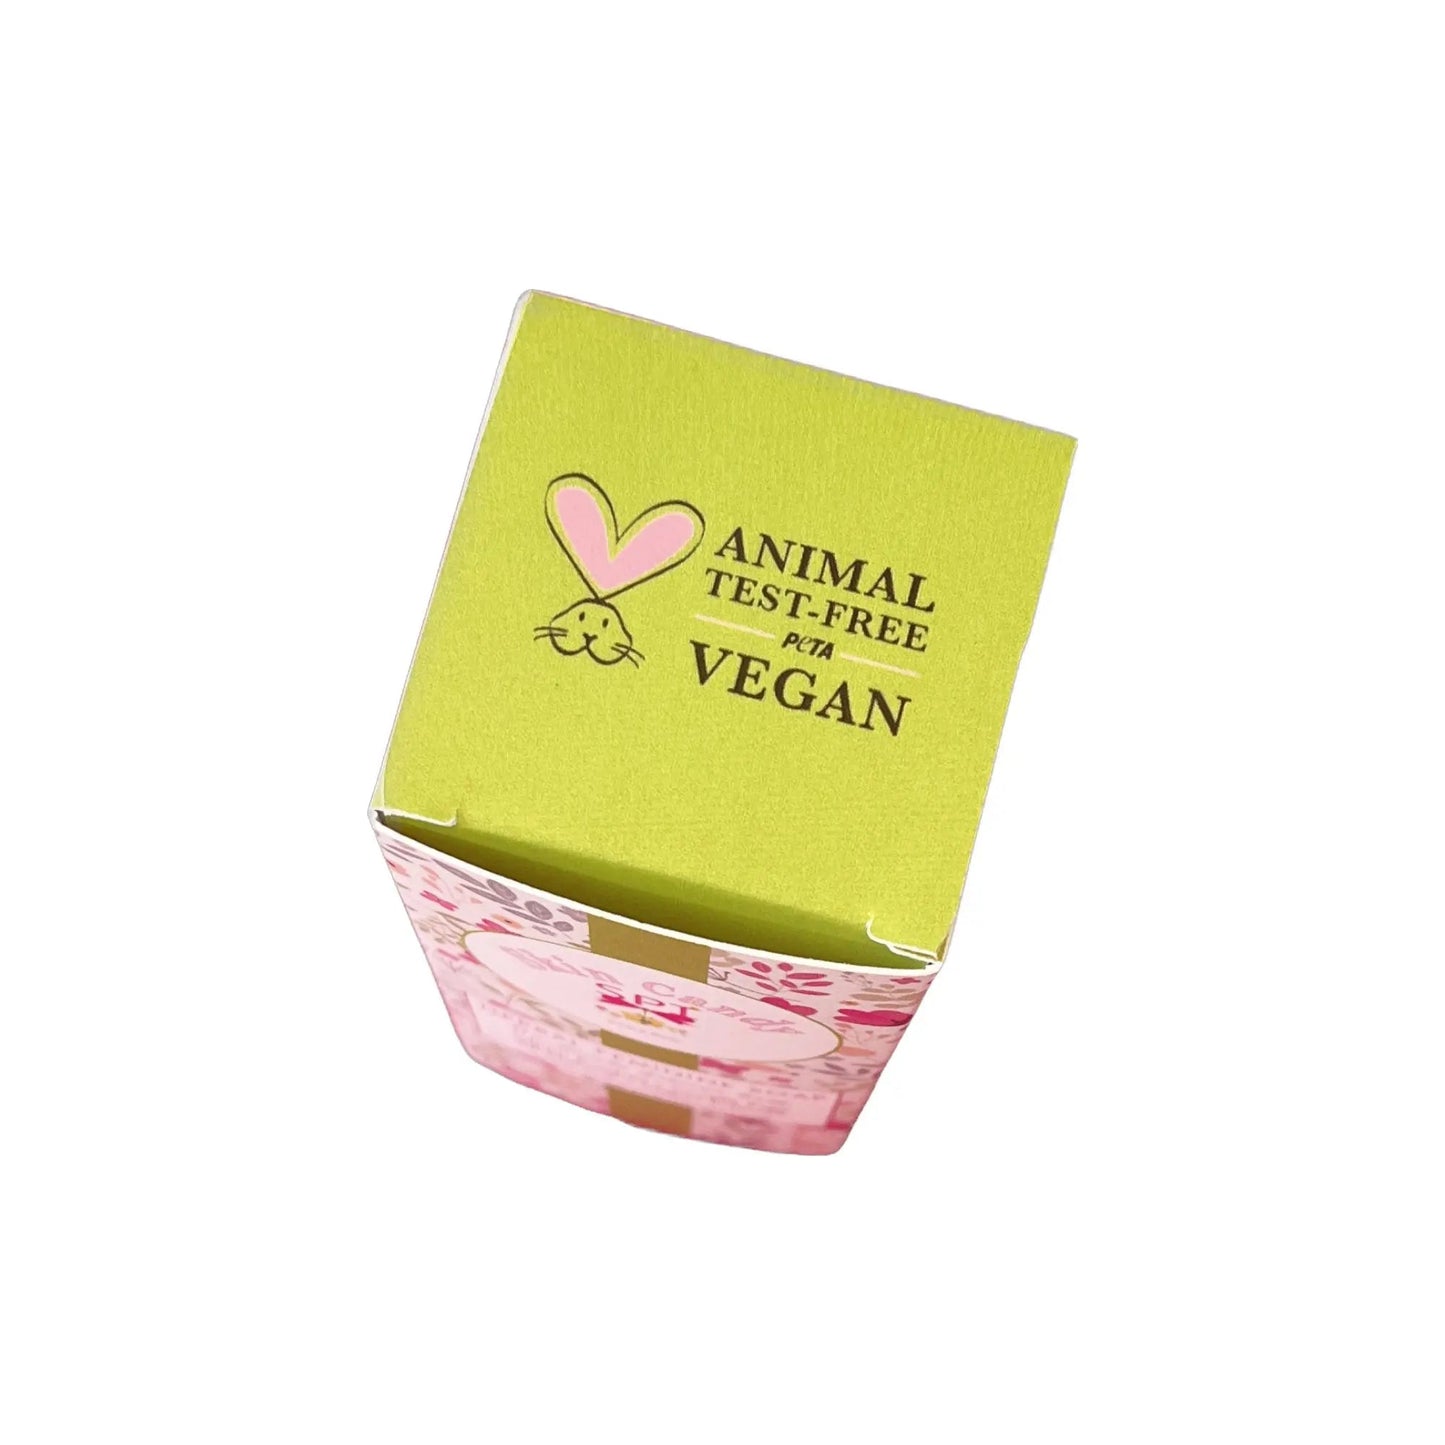 Vegan Bar Soaps That Weren't Tested on Animals